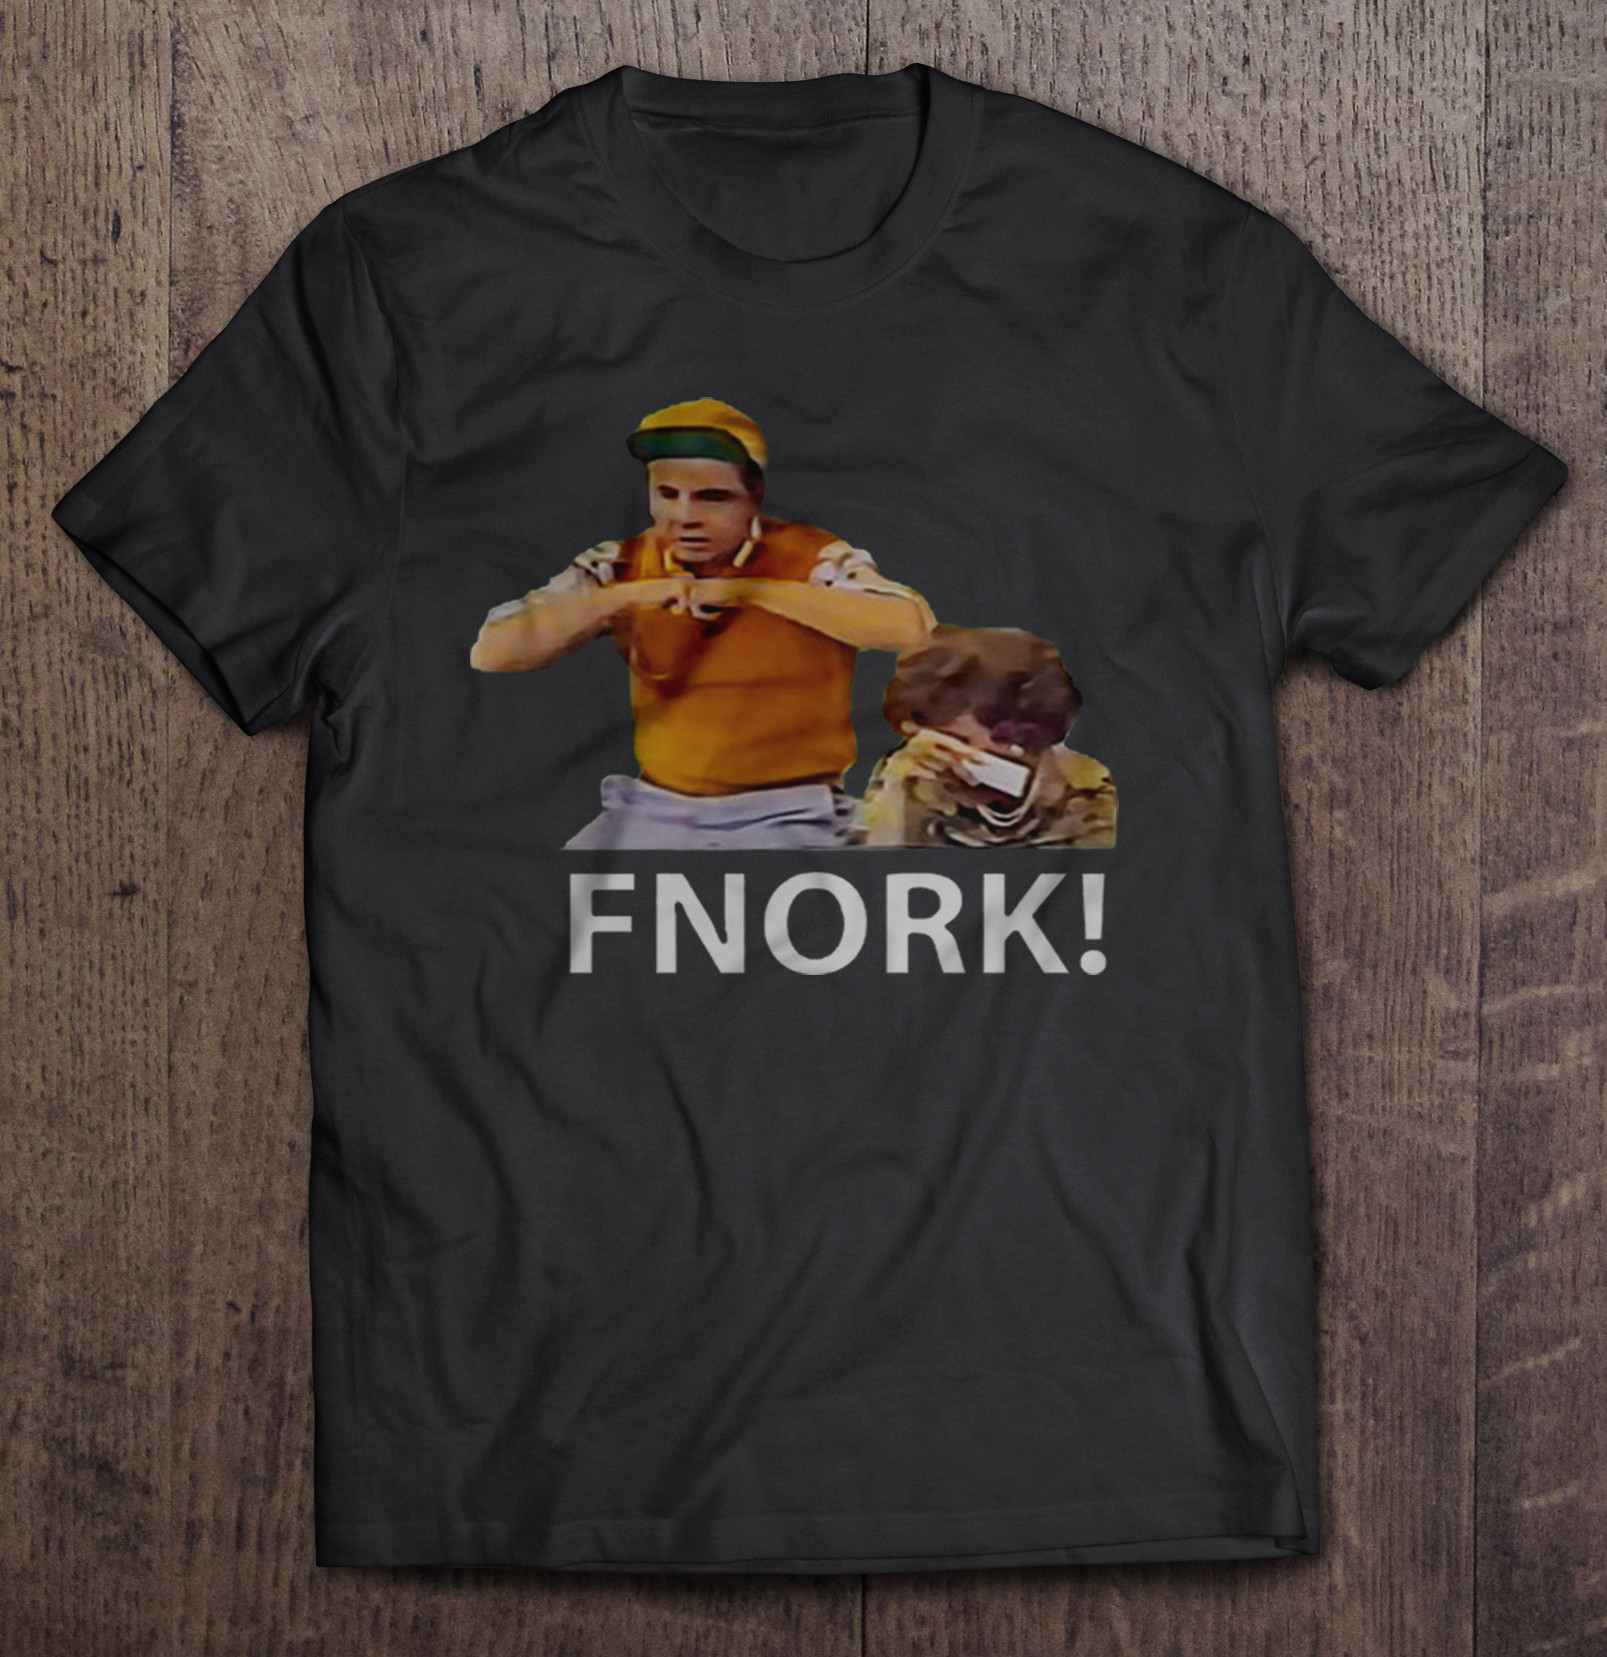 The Carol Burnett Show Frork Version T- Shirt